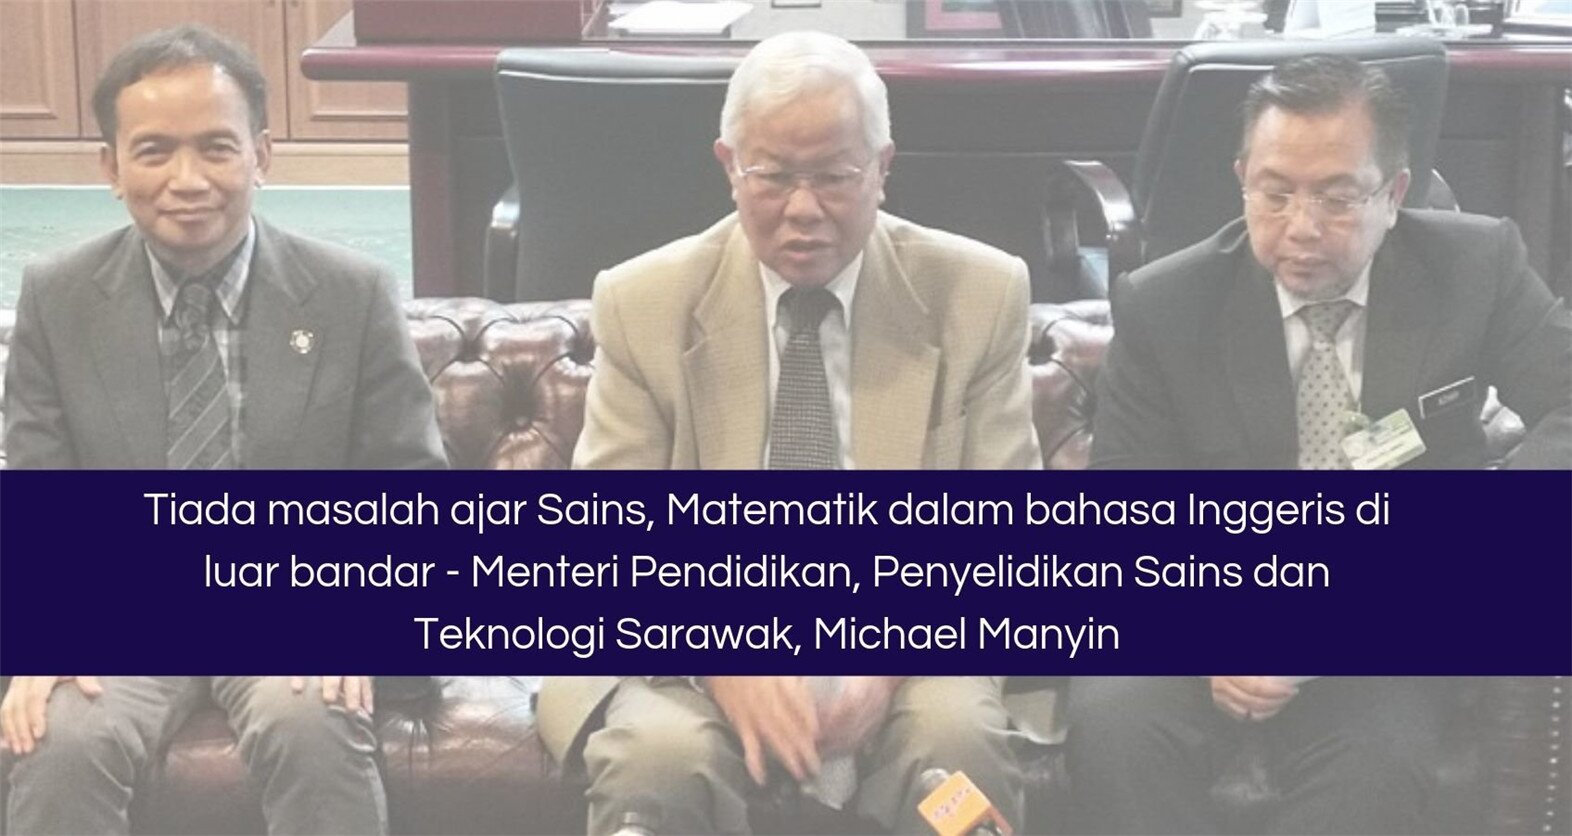 Tiada masalah ajar Sains, Matematik dalam bahasa Inggeris di luar bandar, kata menteri Sarawak